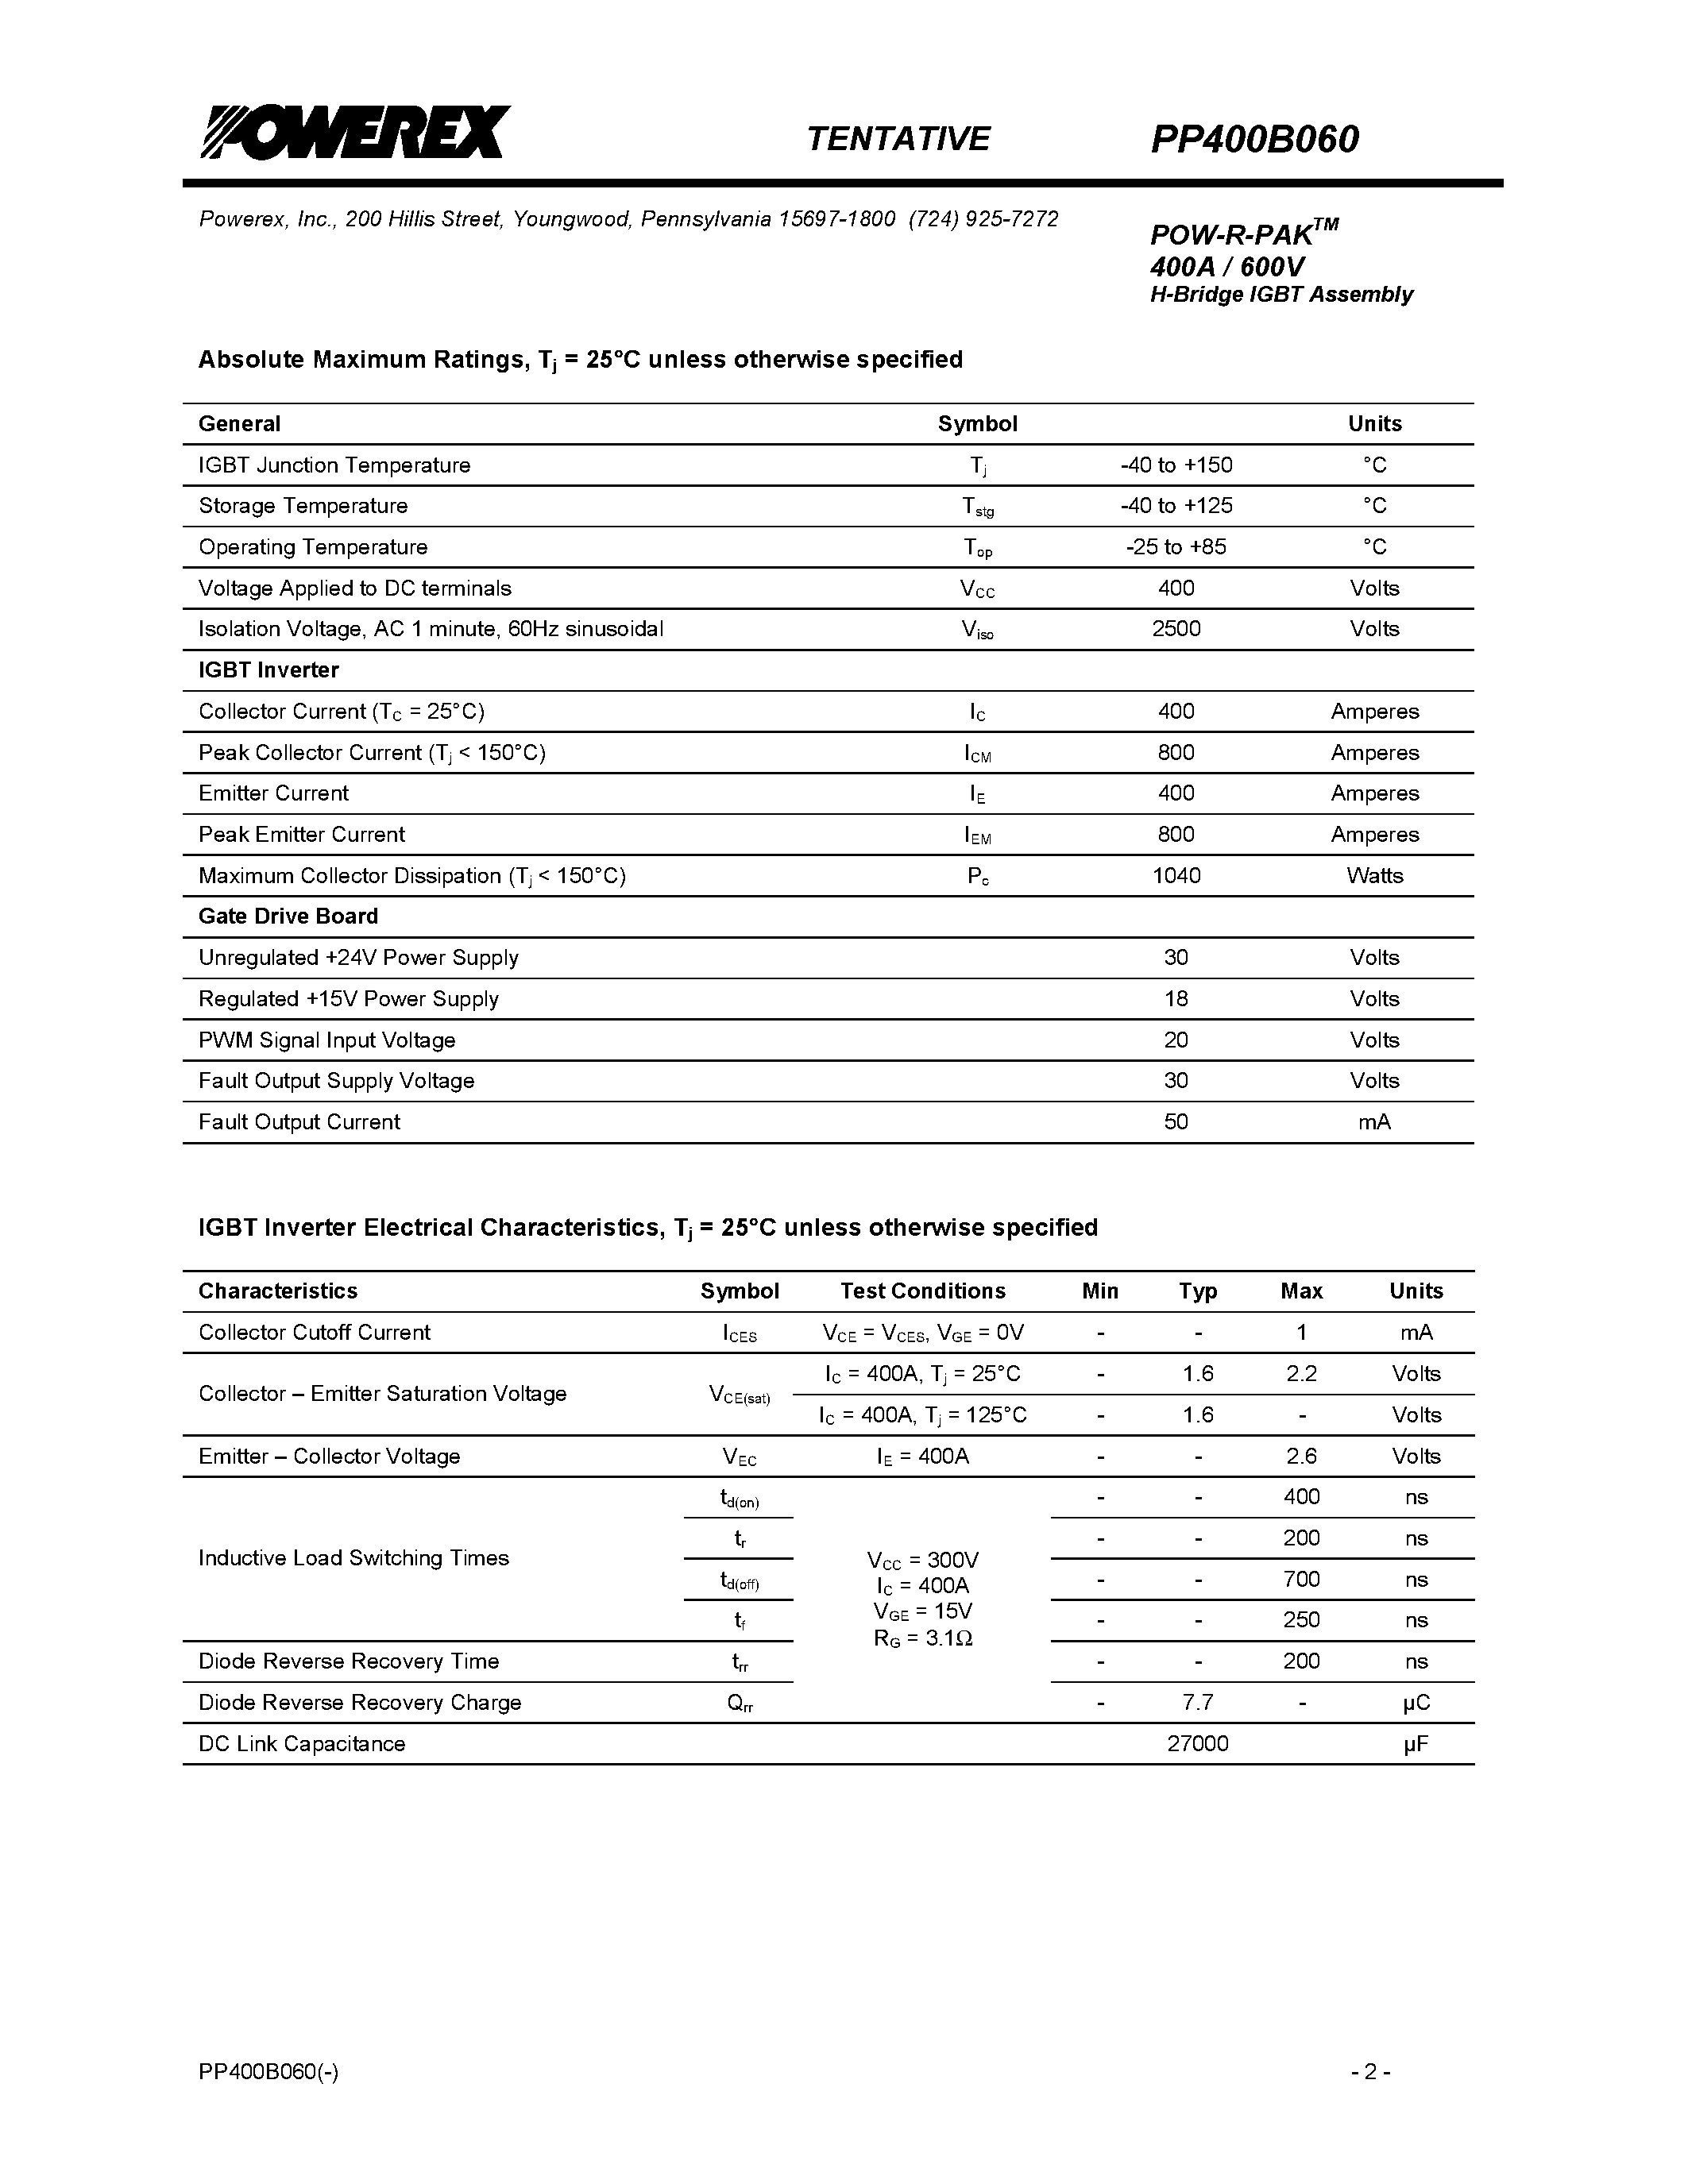 Datasheet PP400B060 - POW-R-PAK 400A / 600V H-Bridge IGBT Assembly page 2